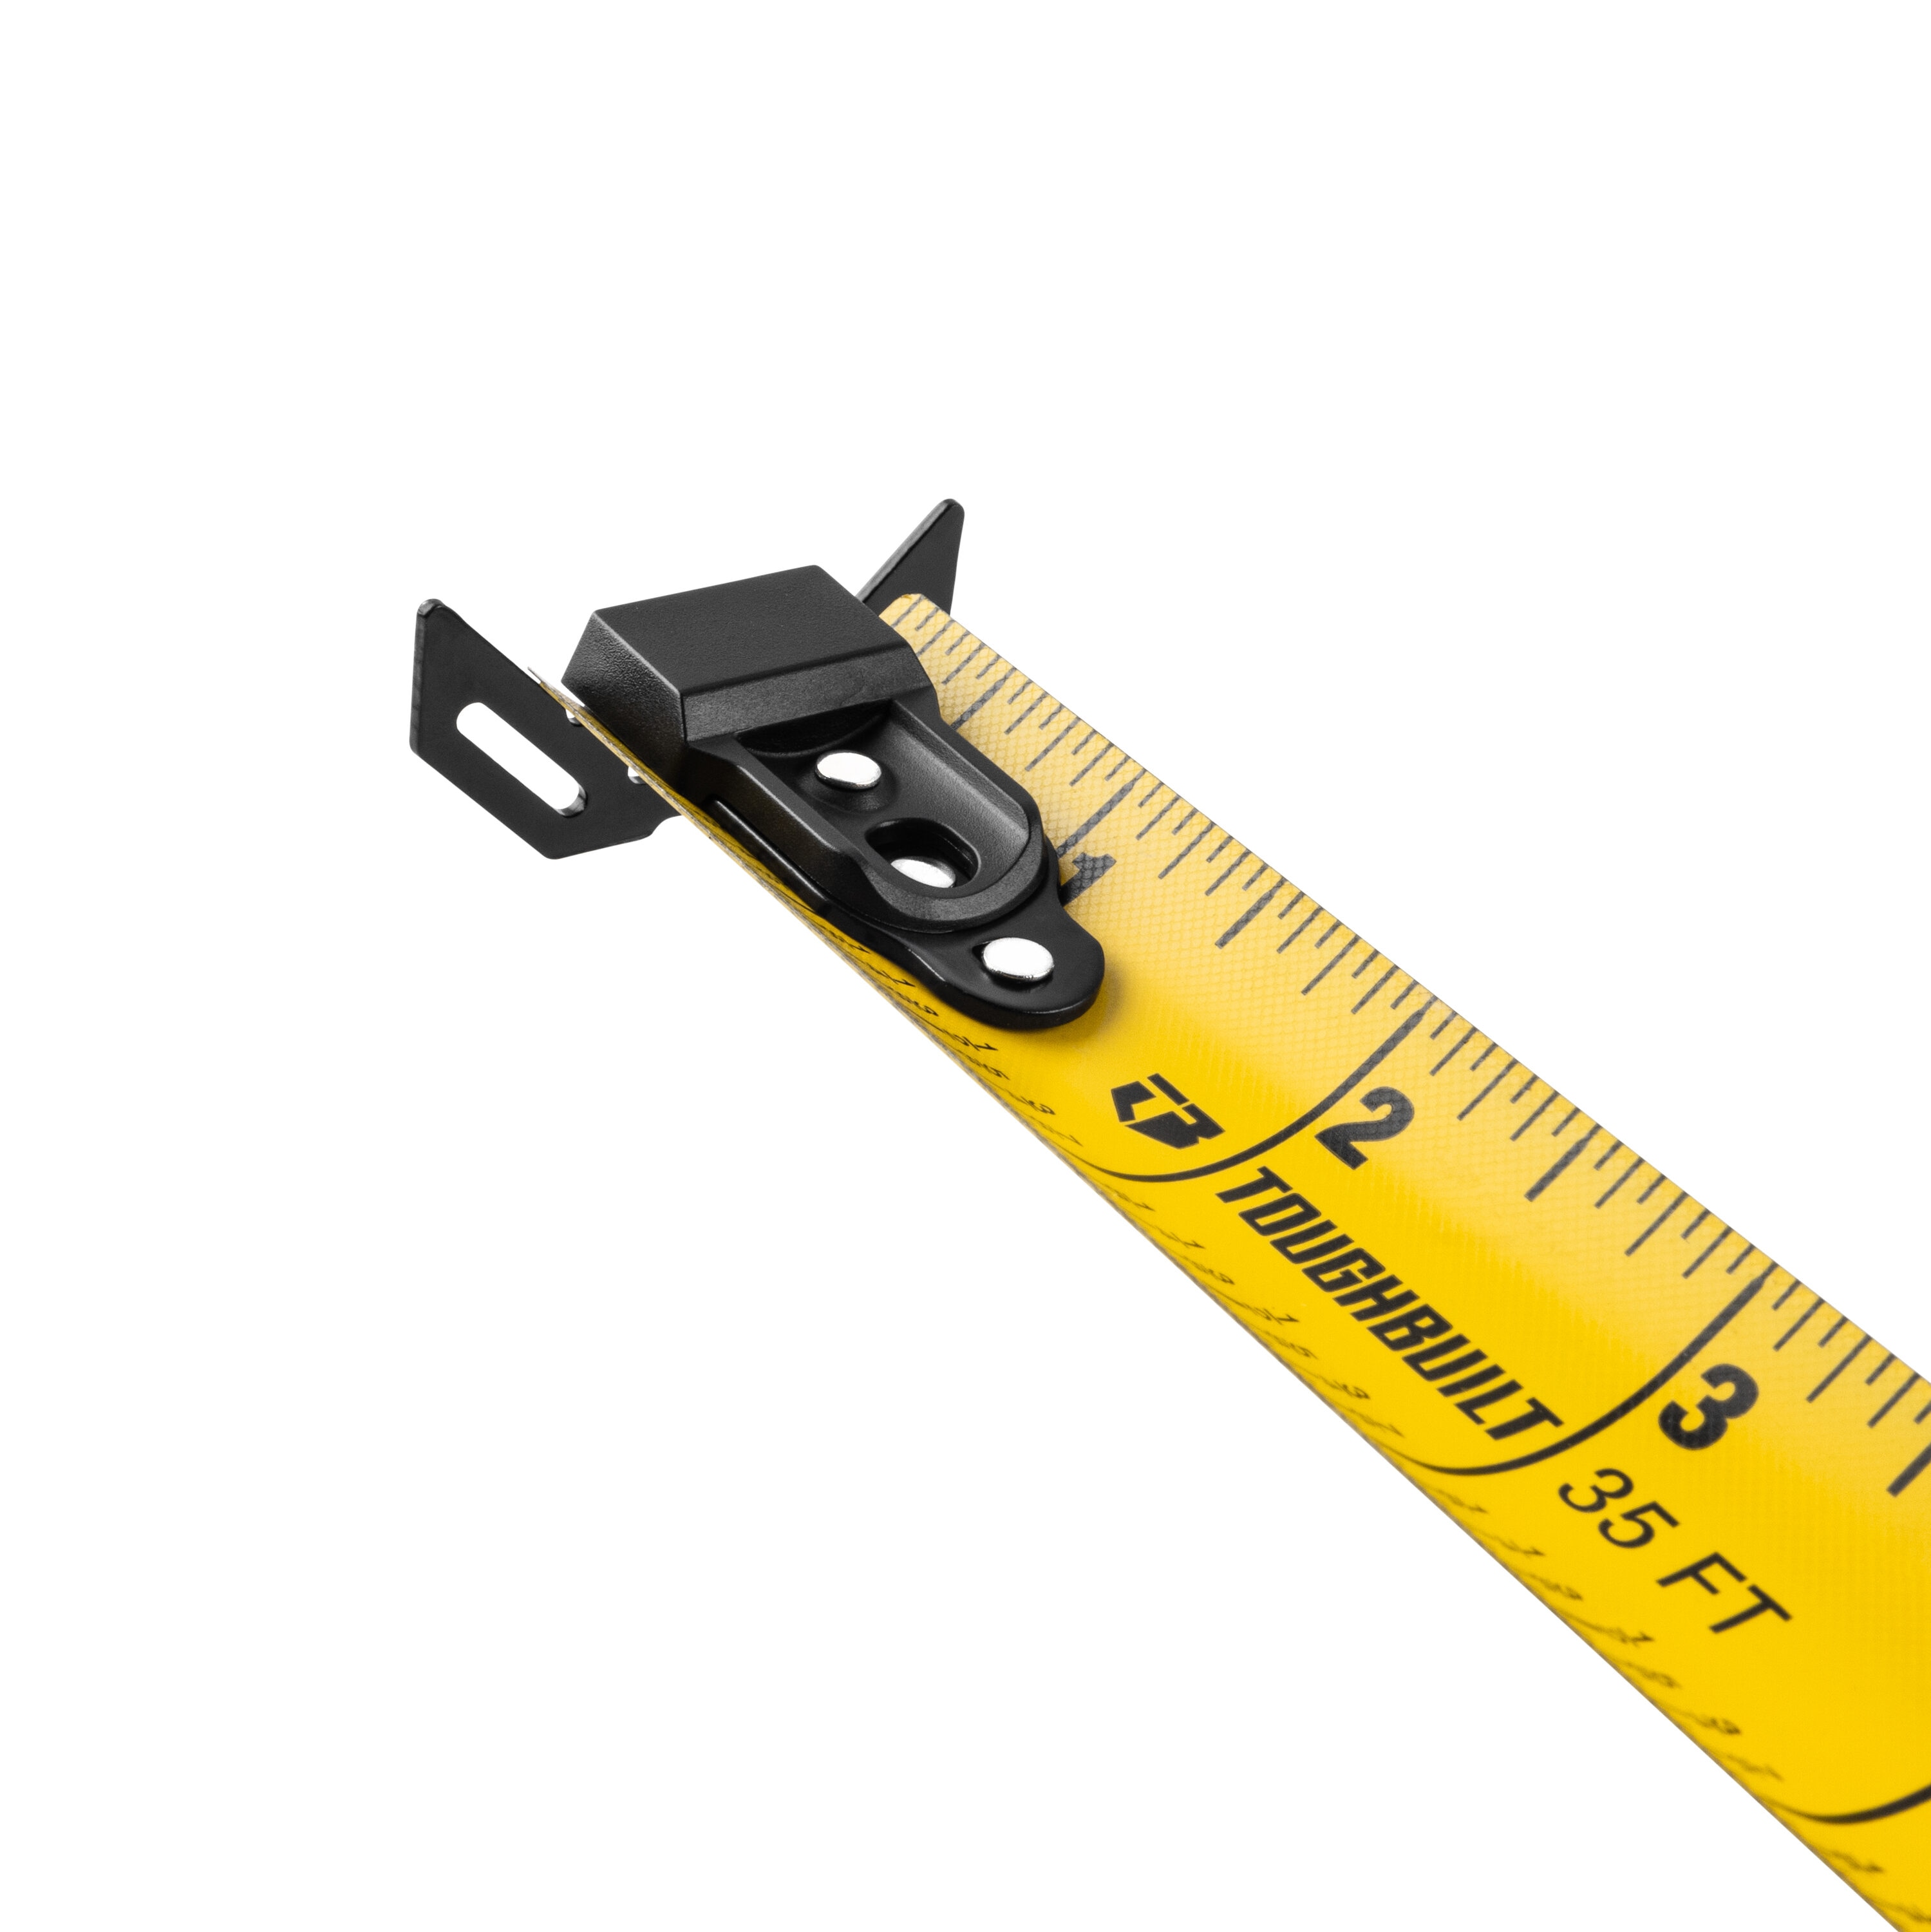 Isoplam branded practical flexible measuring tape, 5 meters long tape